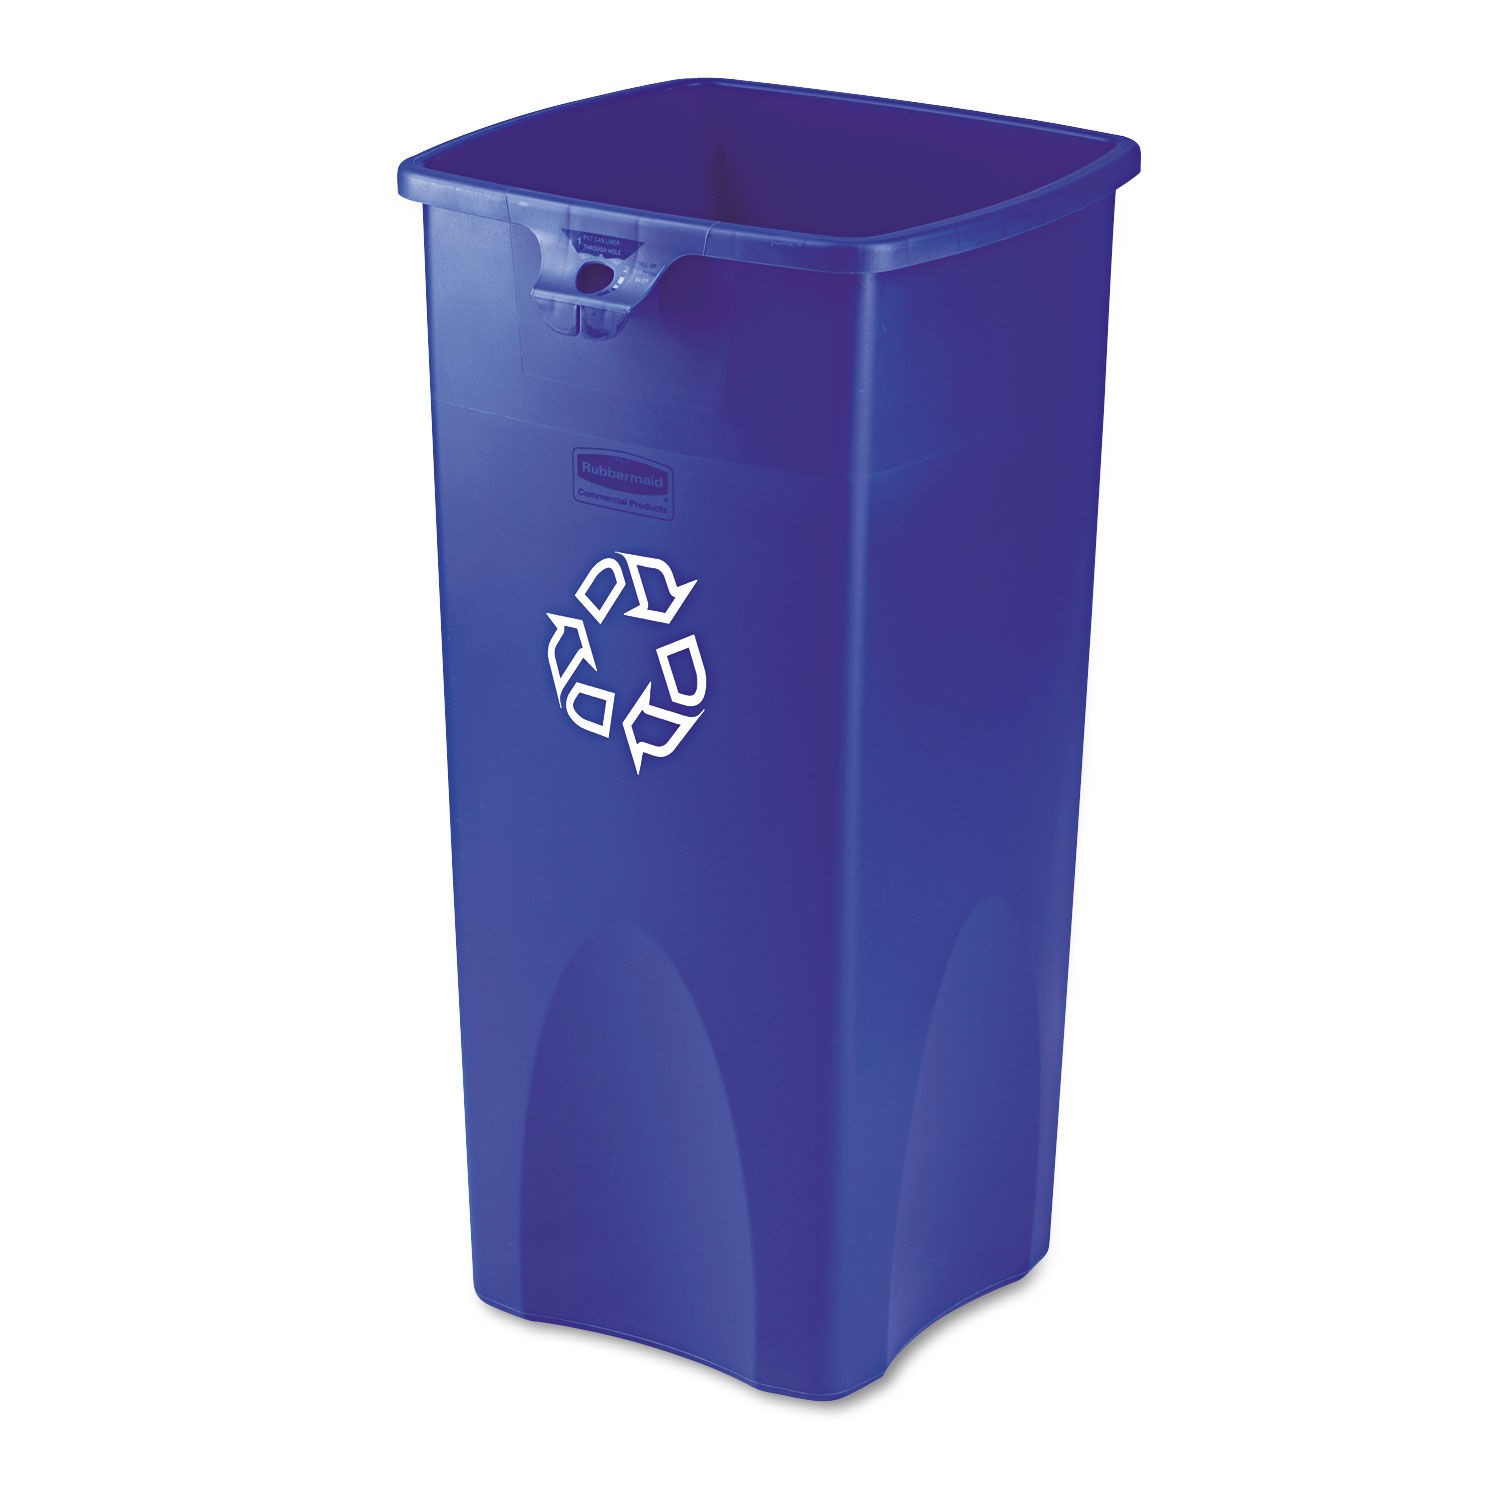 Untouchable Square Recycling Container, Plastic, 23 Gallon, Blue